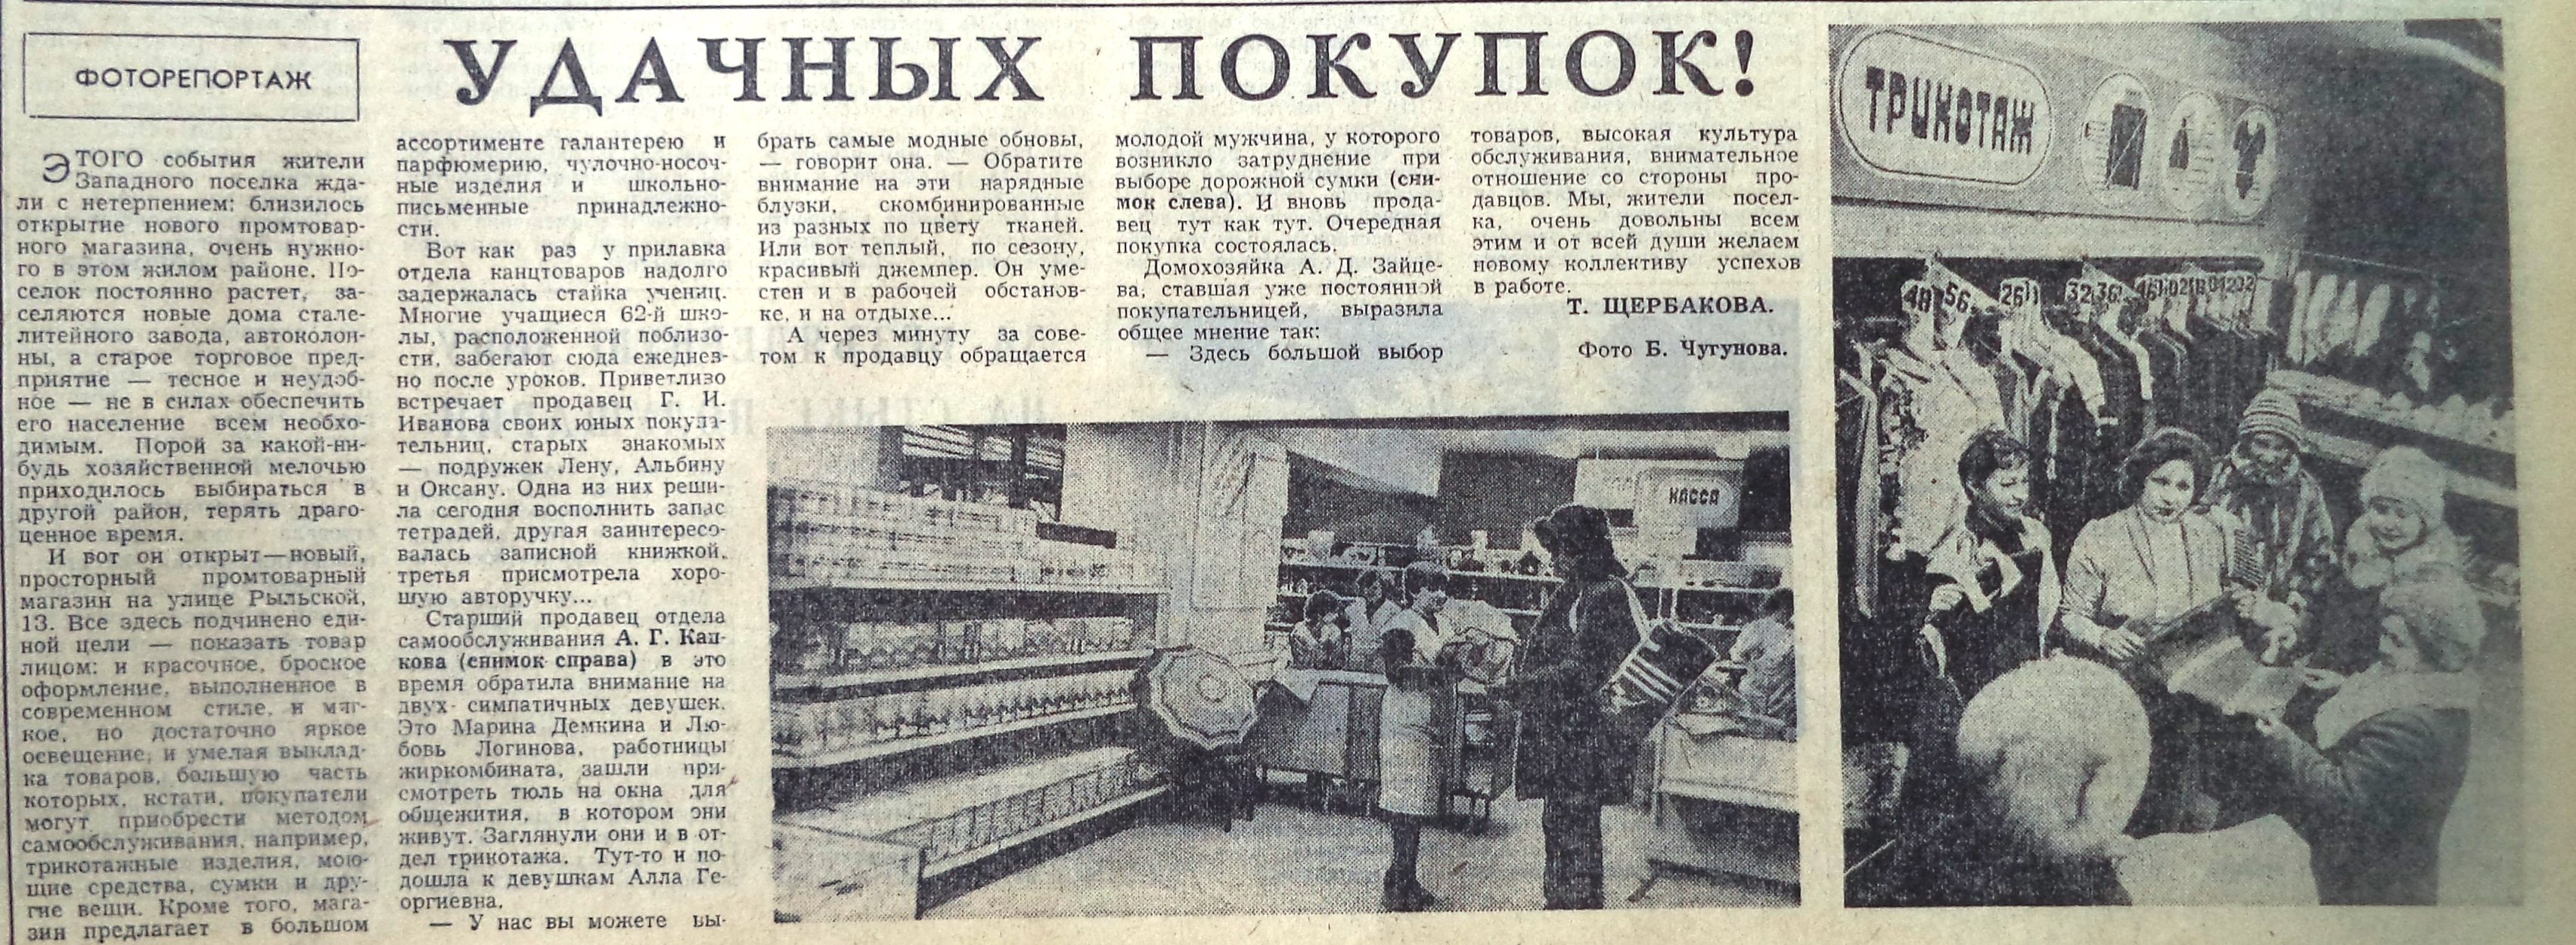 Рыльская-ФОТО-24-ВЗя-1985-12-10-открытие маг. на Рыльской-13-min